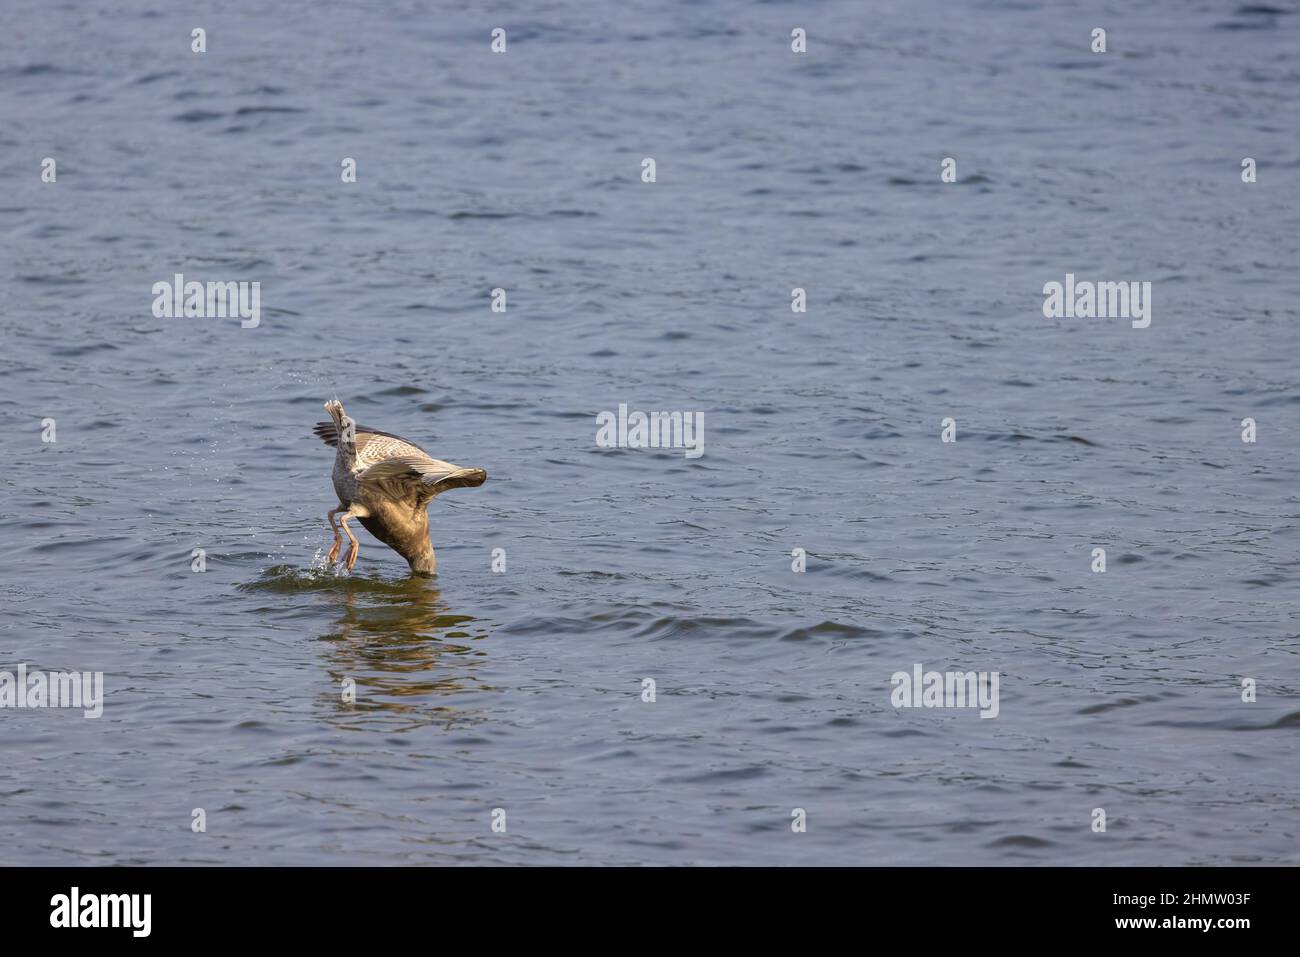 An Olympic gull searching for food in Lake Washington in Seattle, Washington. Stock Photo